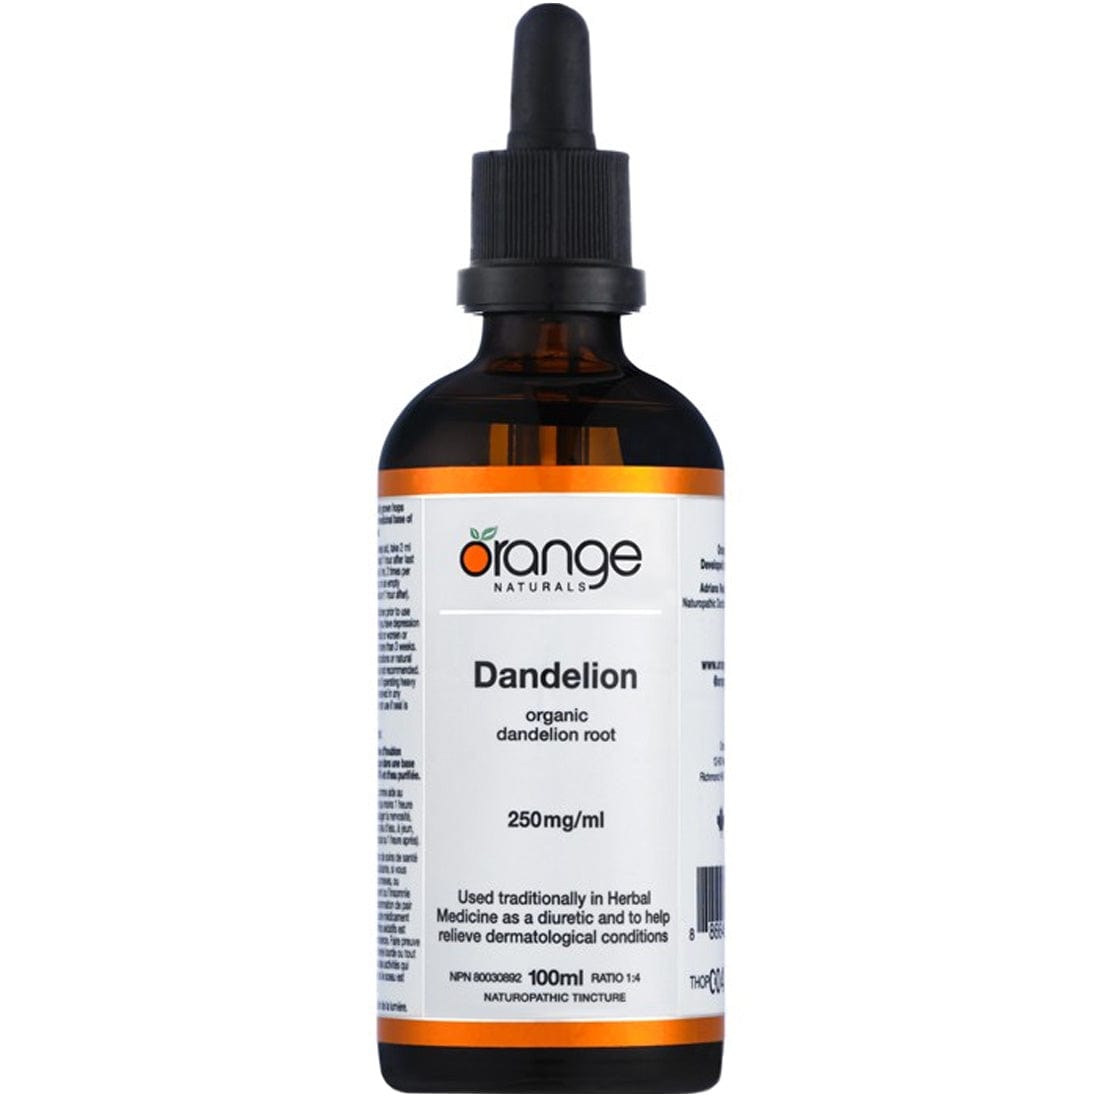 Orange Naturals Dandelion, 100ml Tincture